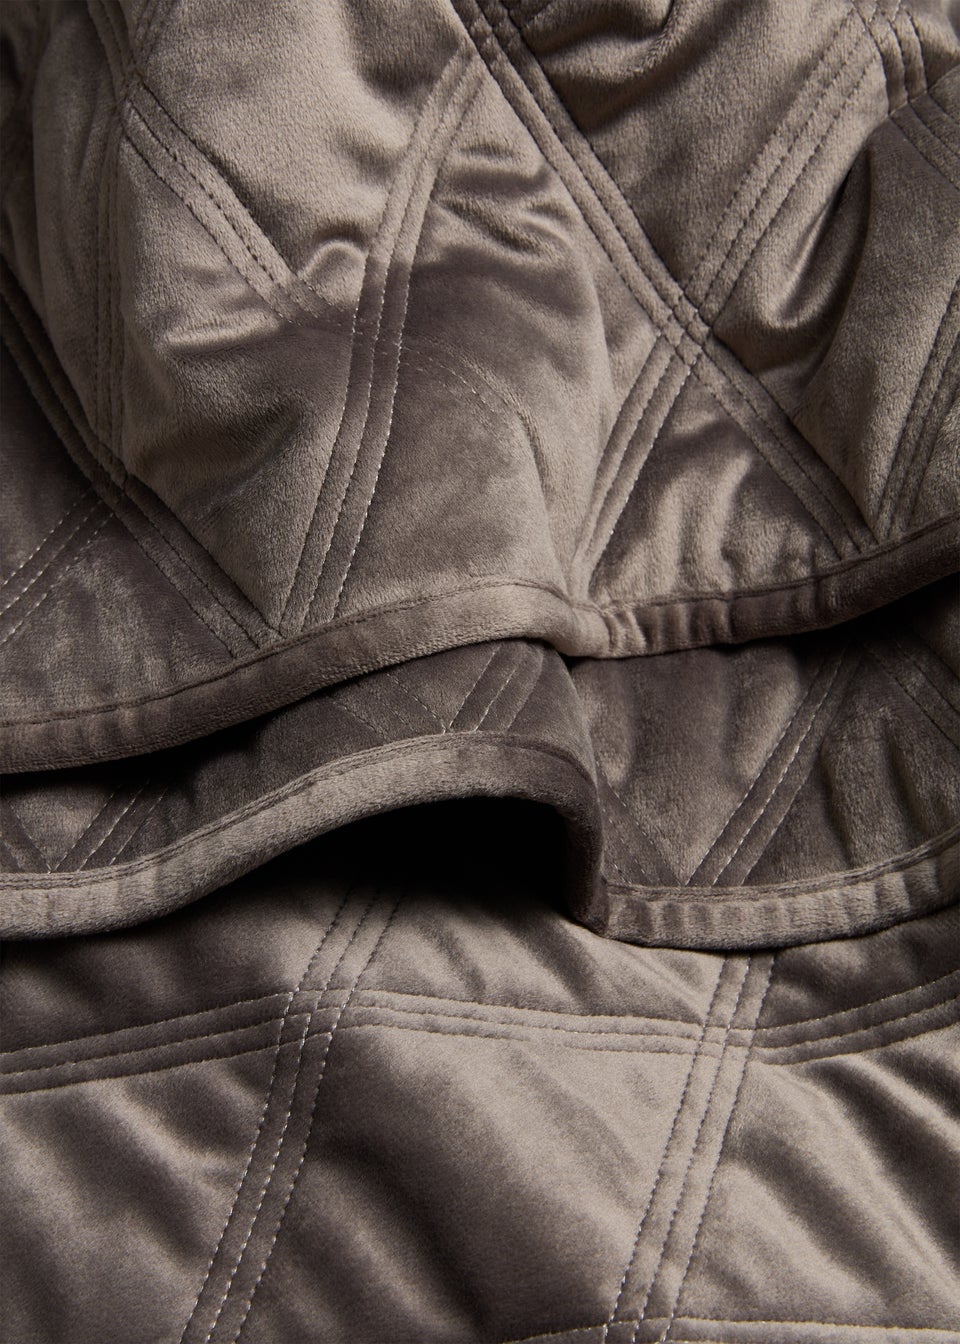 Charcoal Velvet Quilted Bedspread (235cm x 235cm)